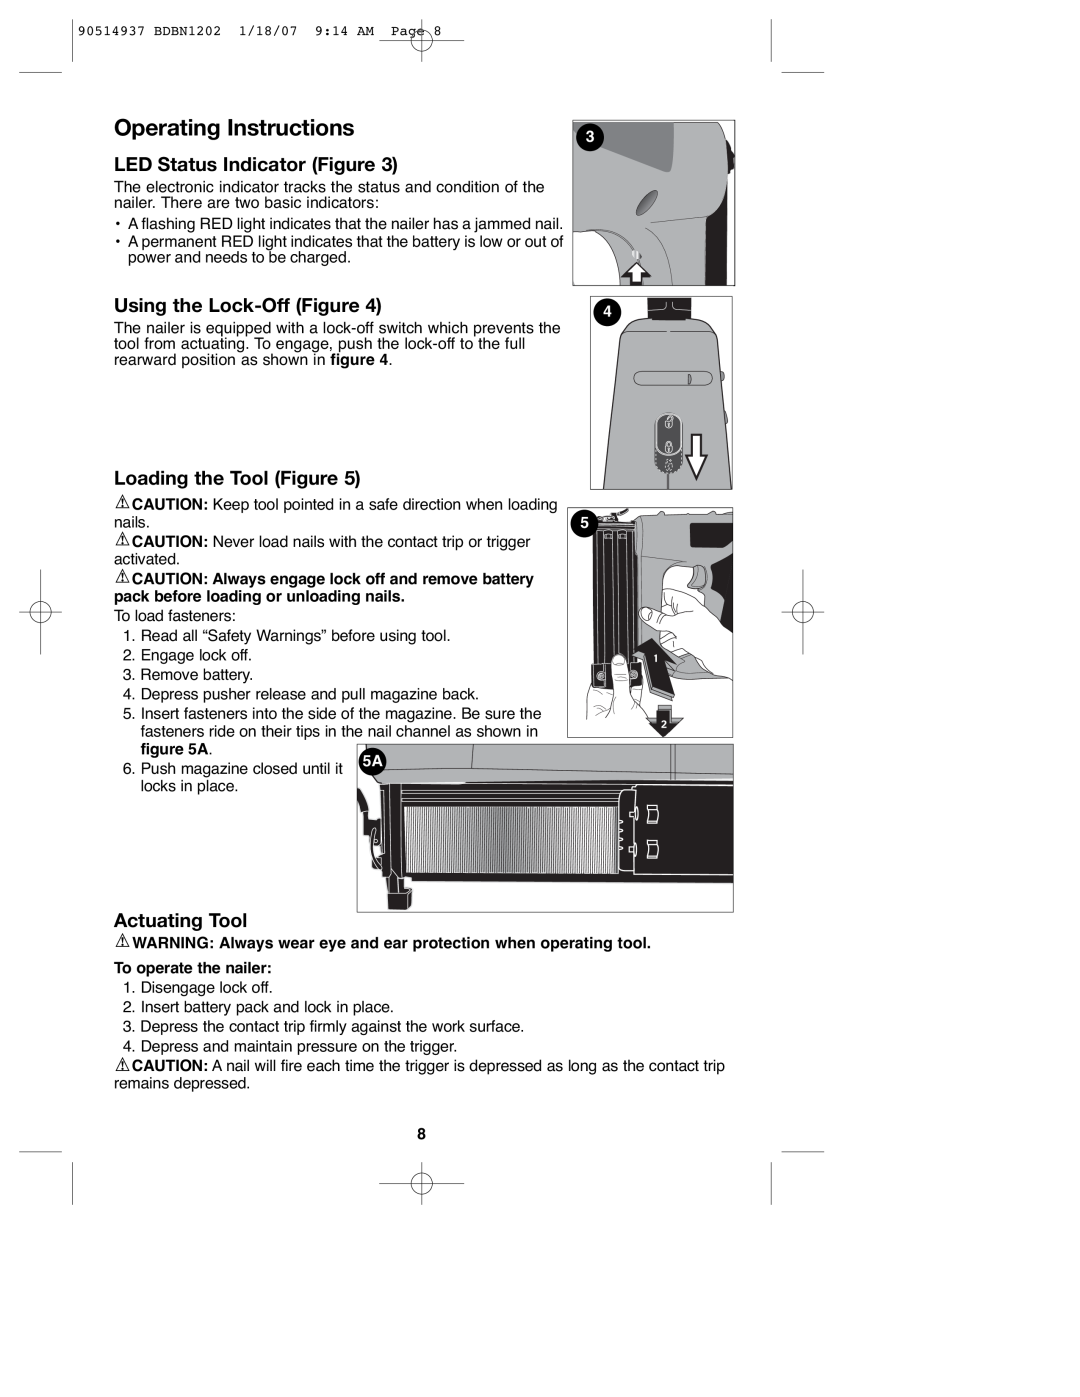 Black & Decker 90514937 Operating Instructions, LED Status Indicator Figure, Using the Lock-Off Figure, Actuating Tool 